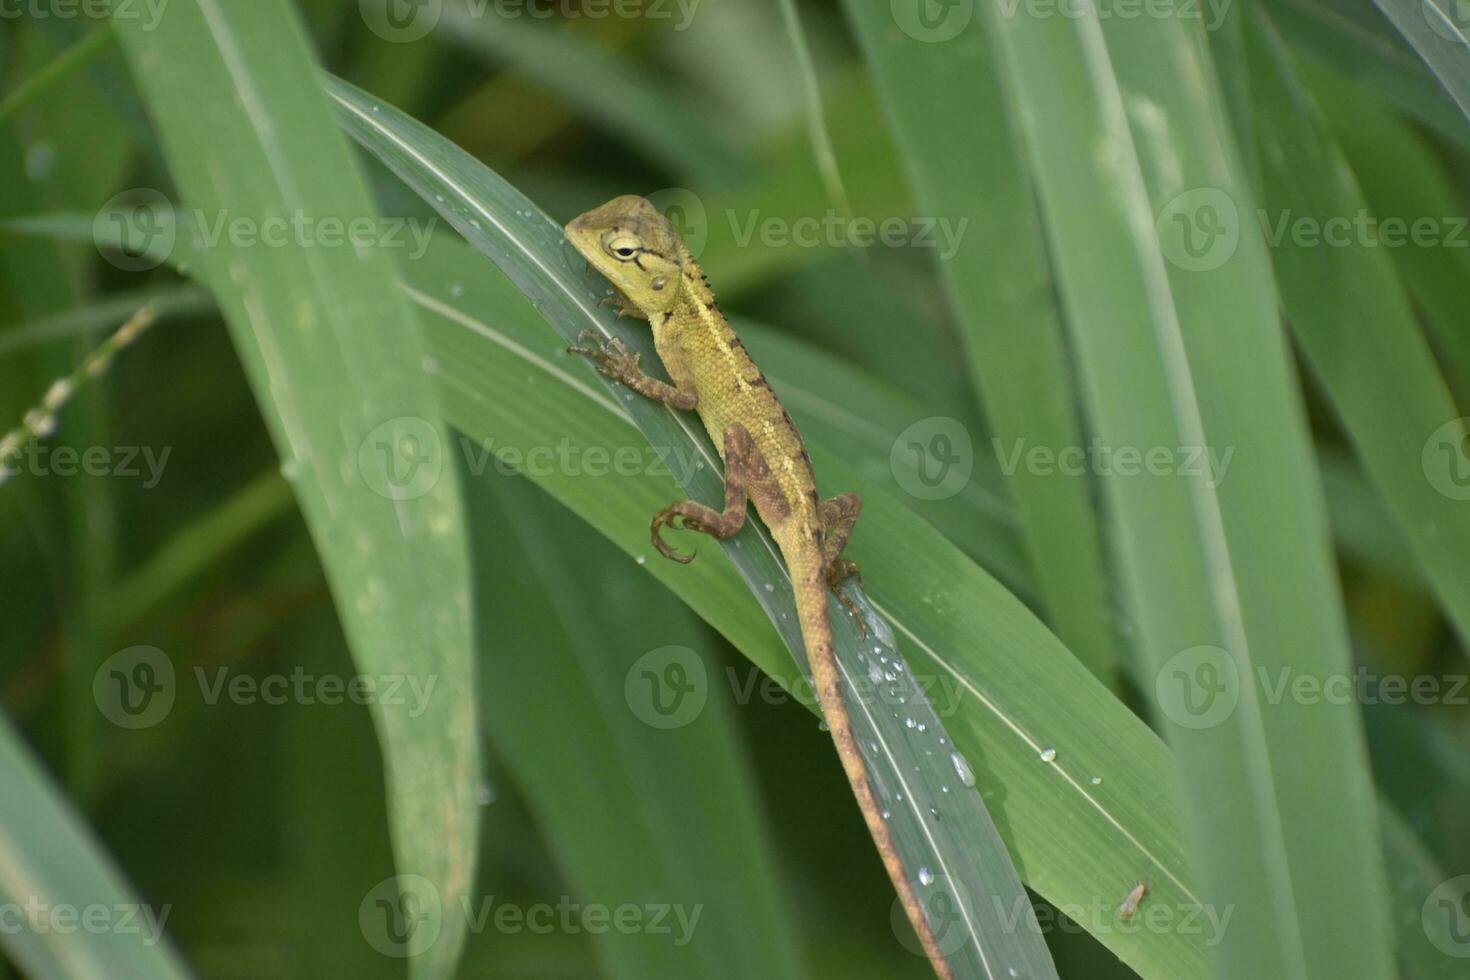 Green lizard on tree branch, green lizard sunbathing on branch, green lizard climb on wood, Jubata lizard photo